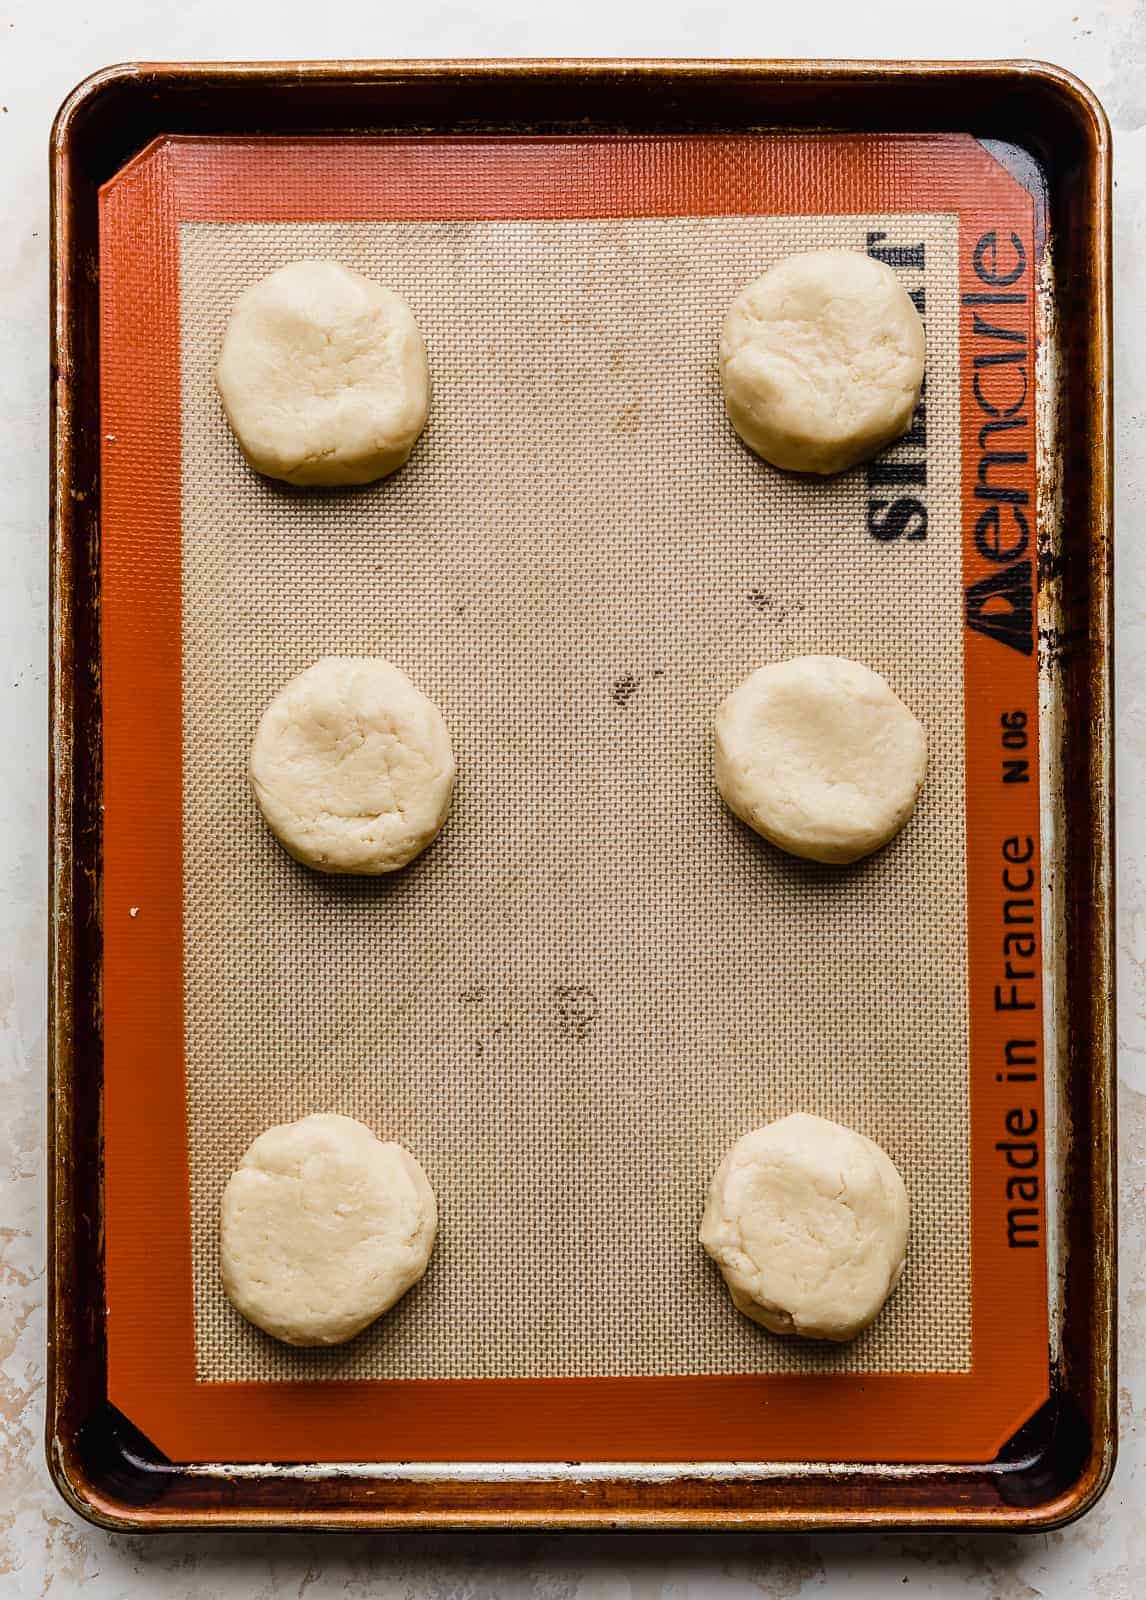 Six sugar cookie dough balls on a baking sheet.